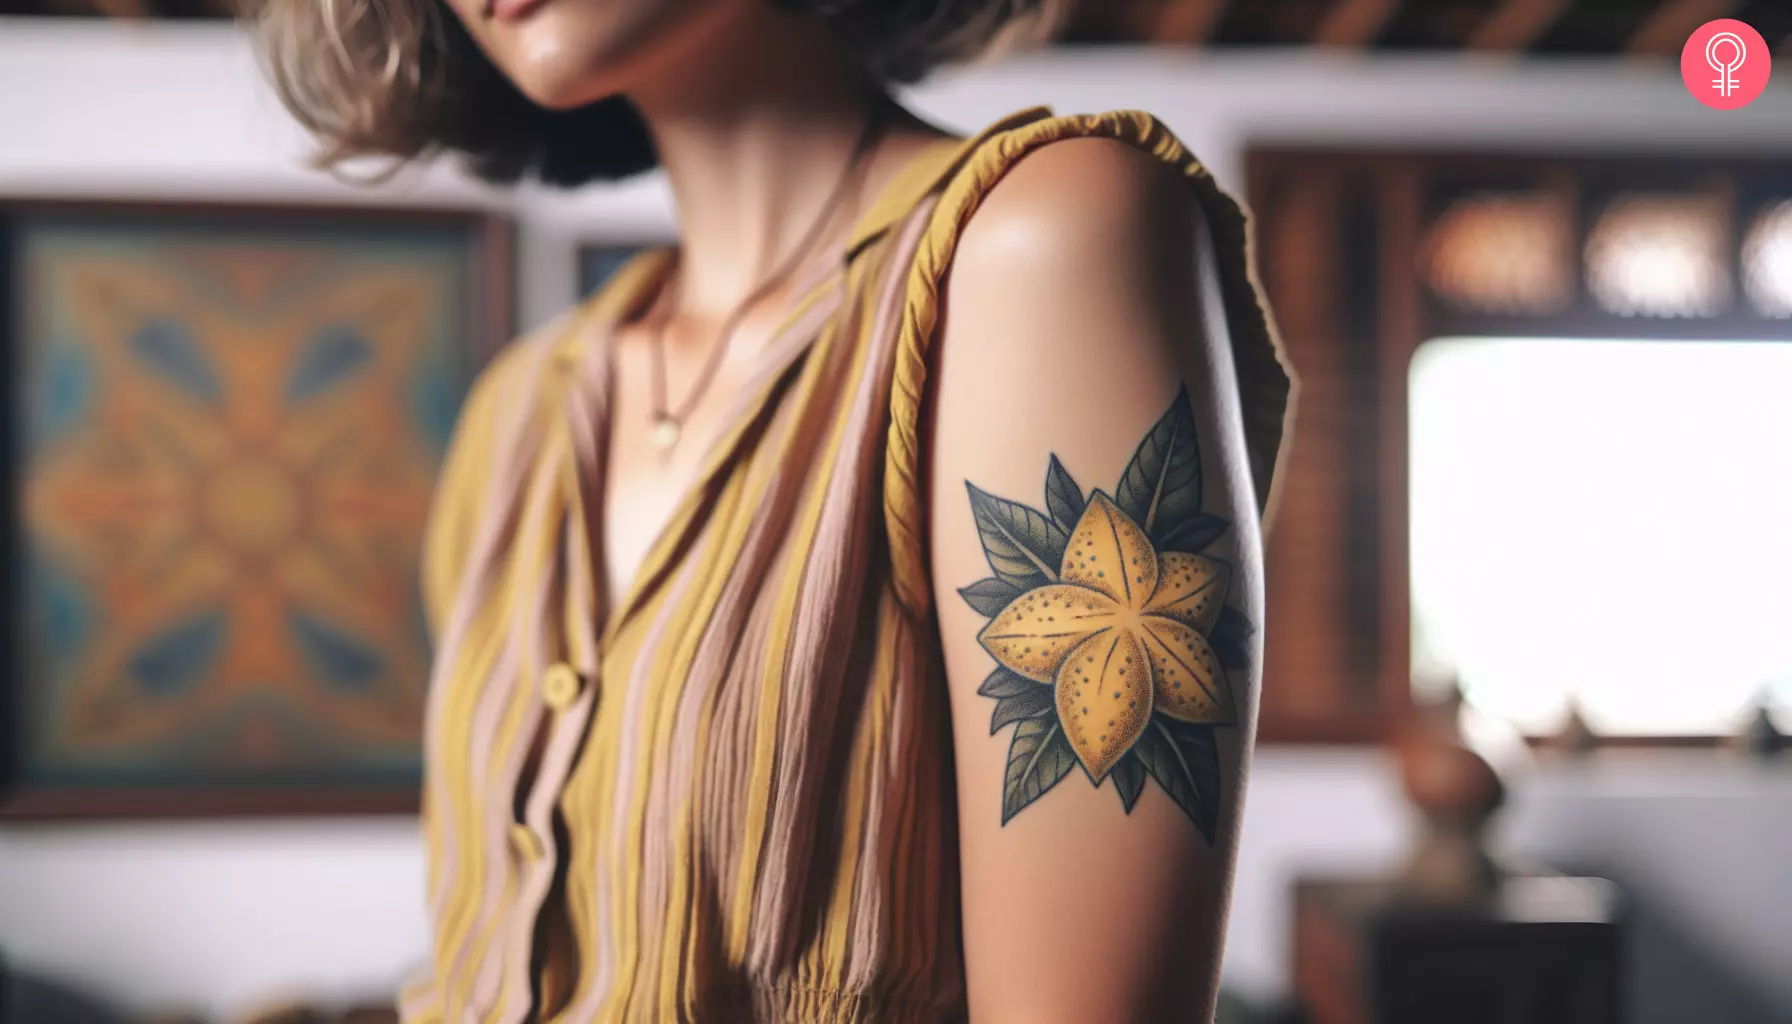 Paopu fruit tattoo on the upper arm